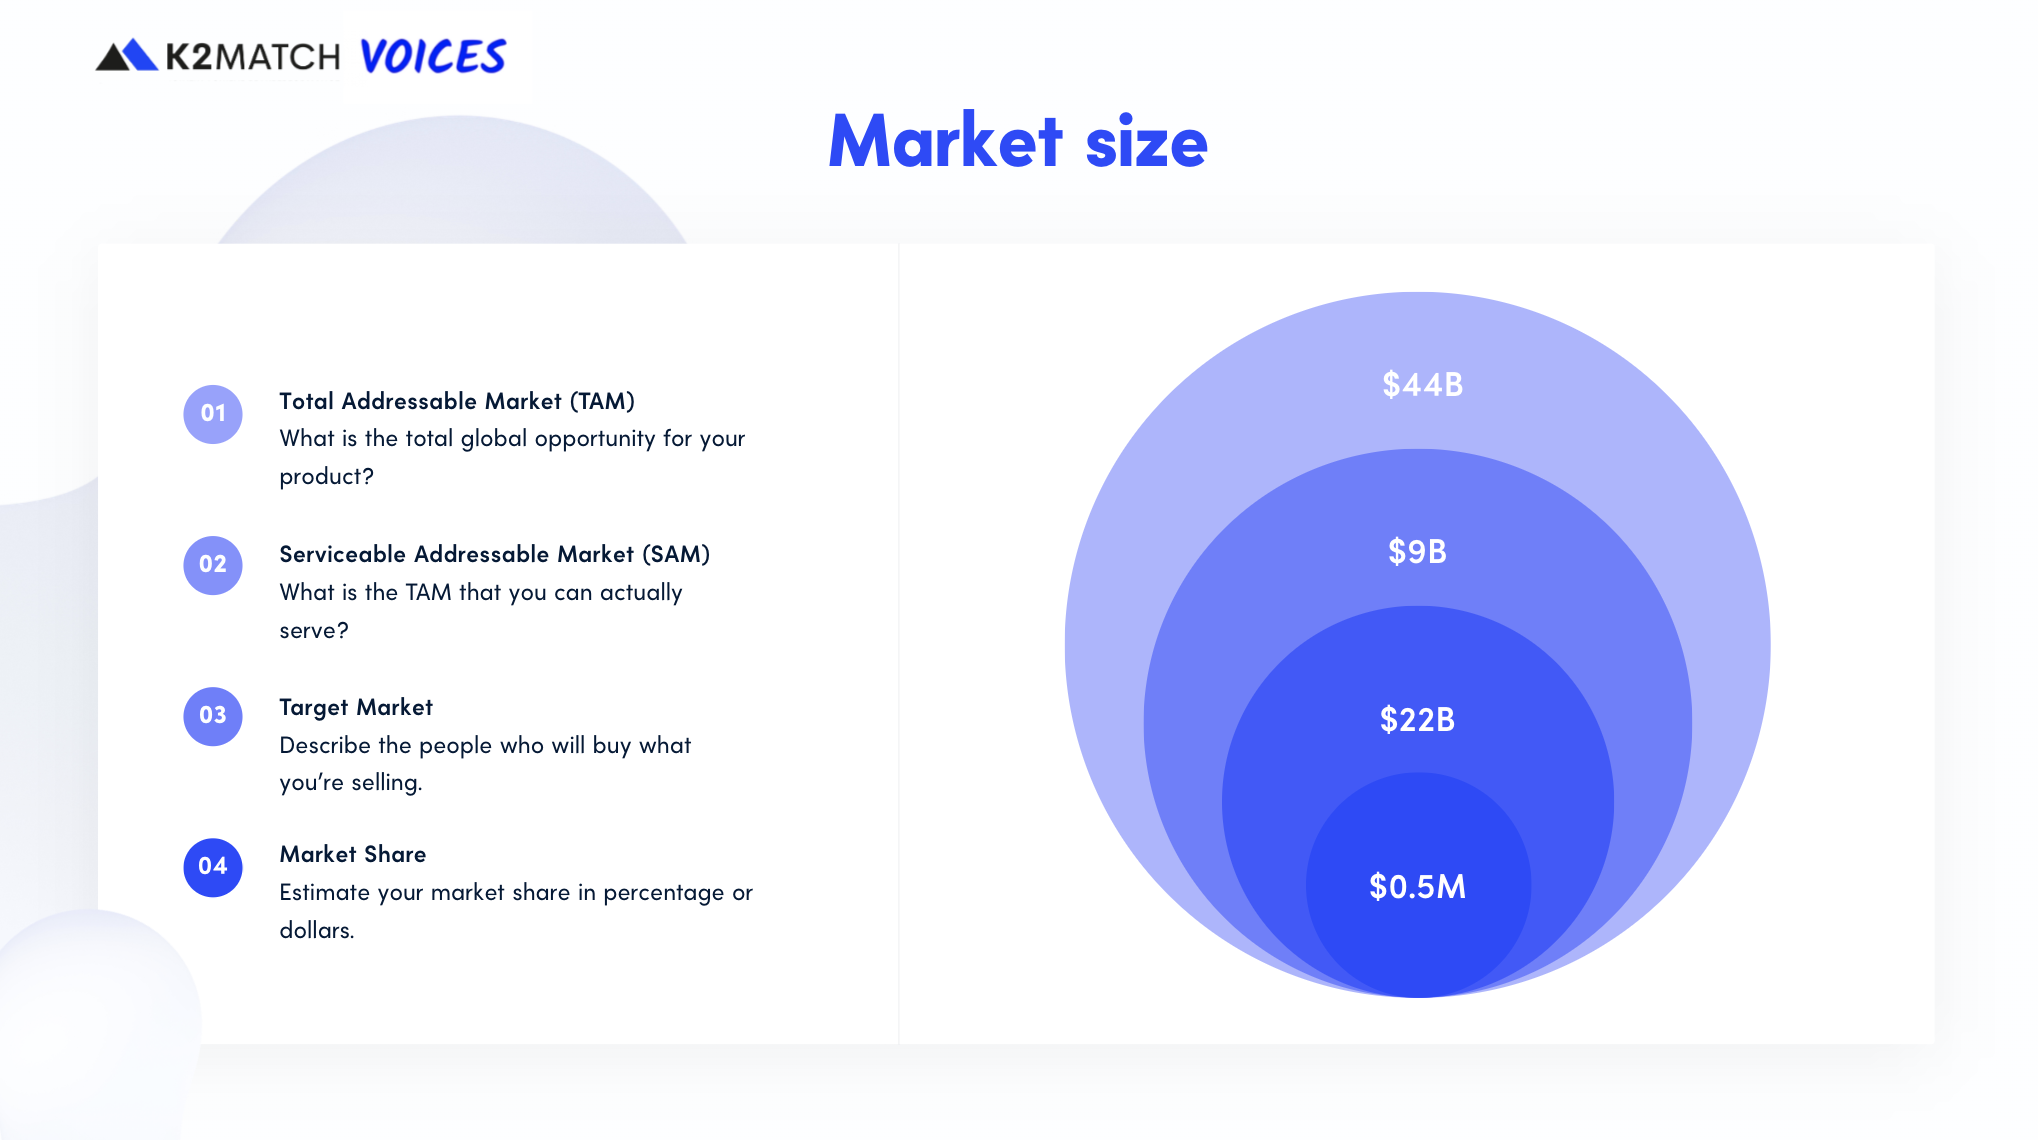 K2MATCH Market Size (TAM) and (SAM)